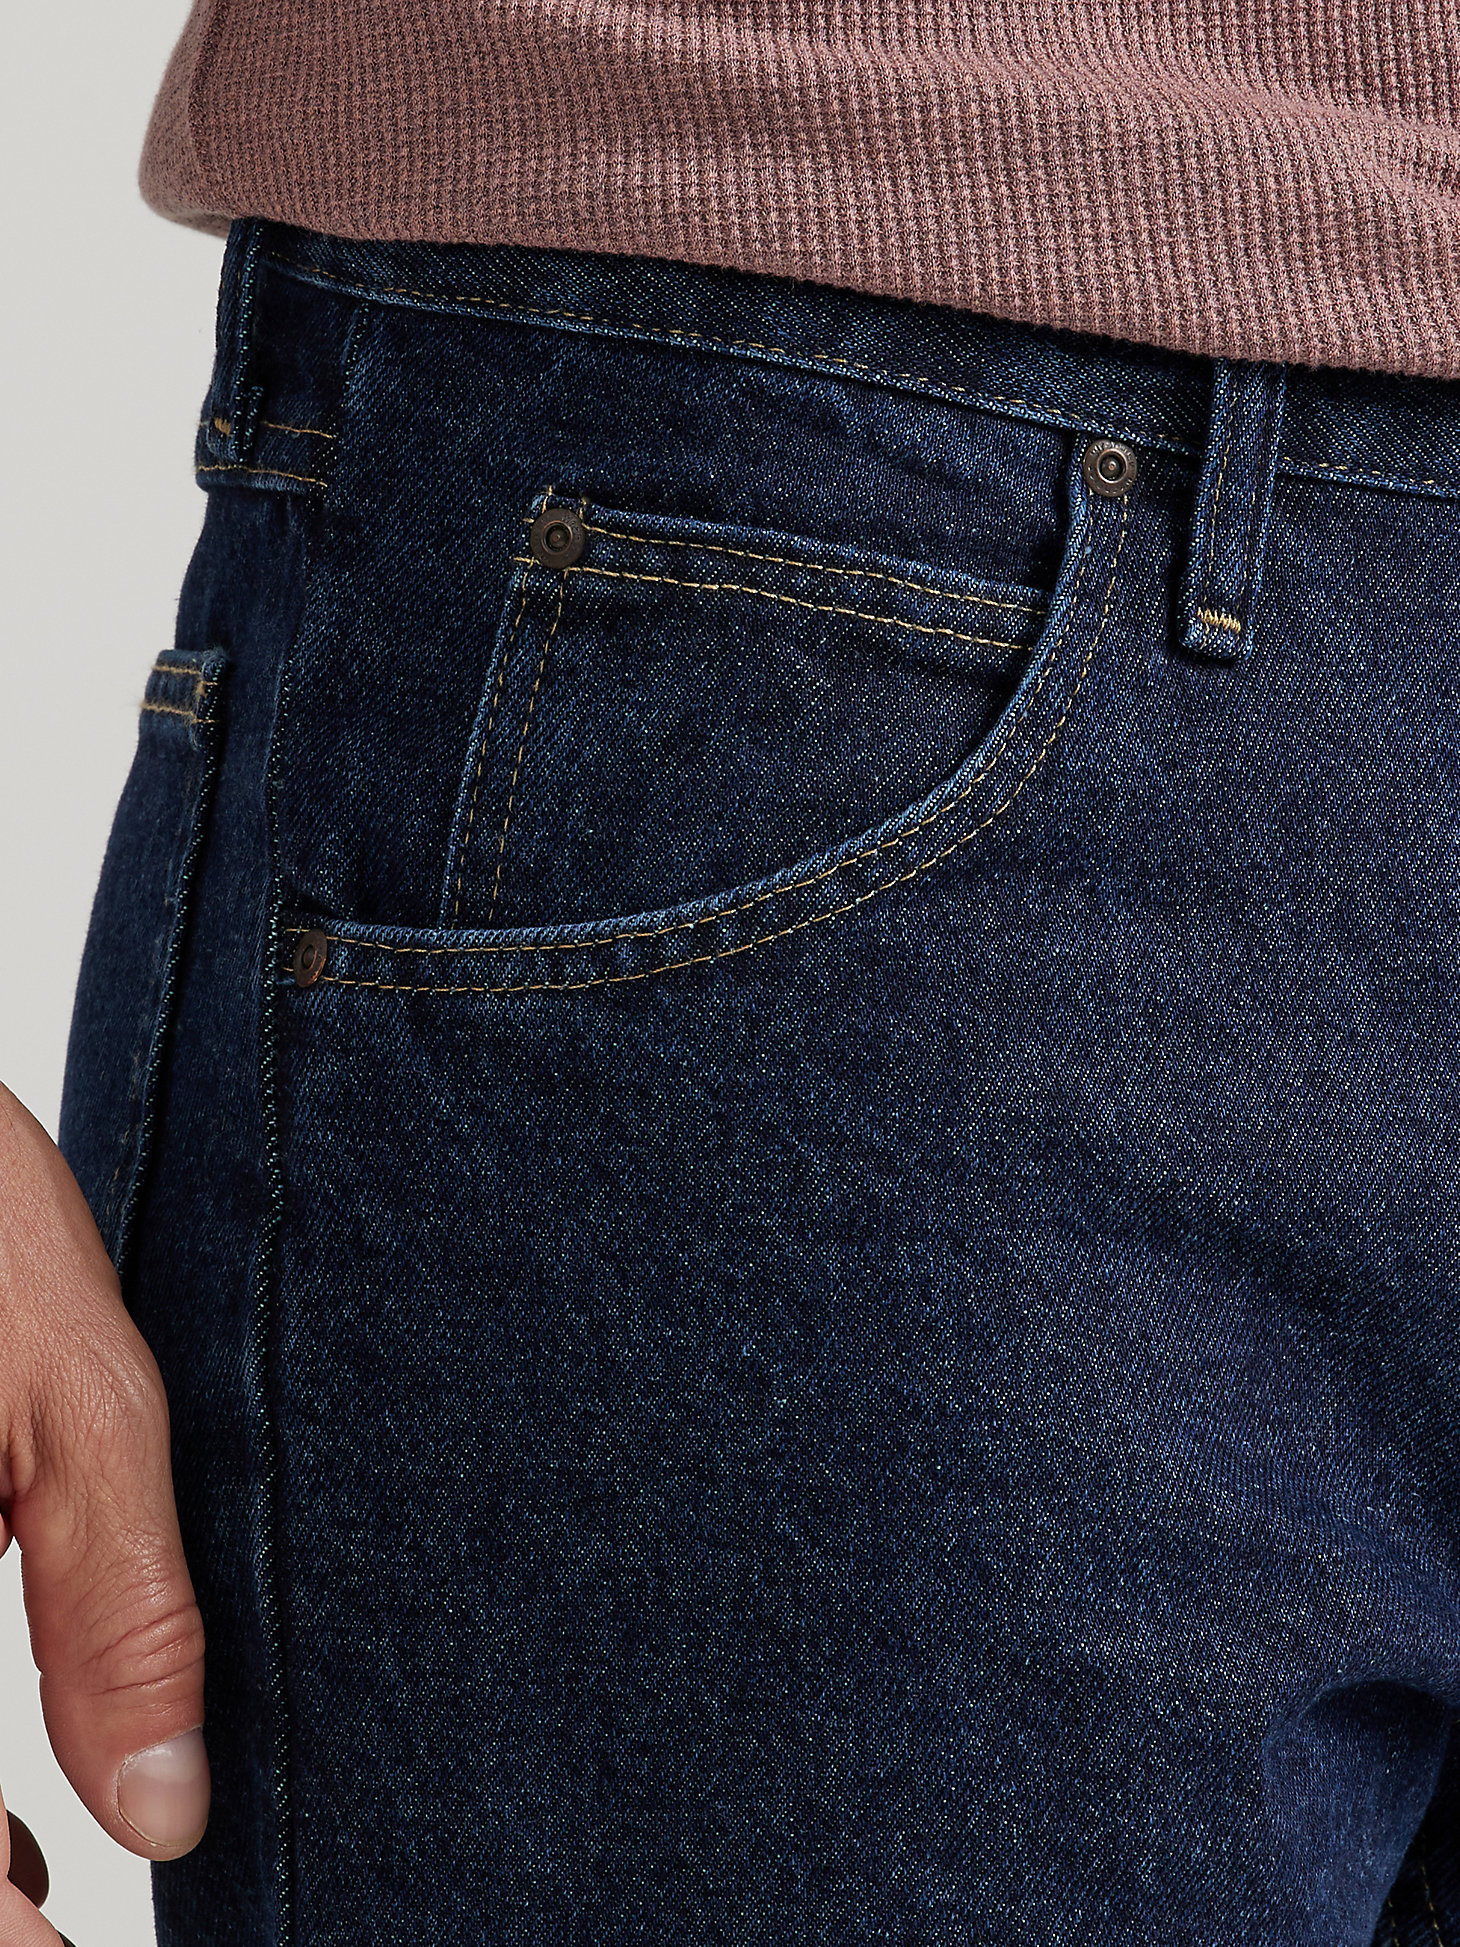 Wrangler® Five Star Premium Denim Regular Fit Jean in Midnight Rinse alternative view 4